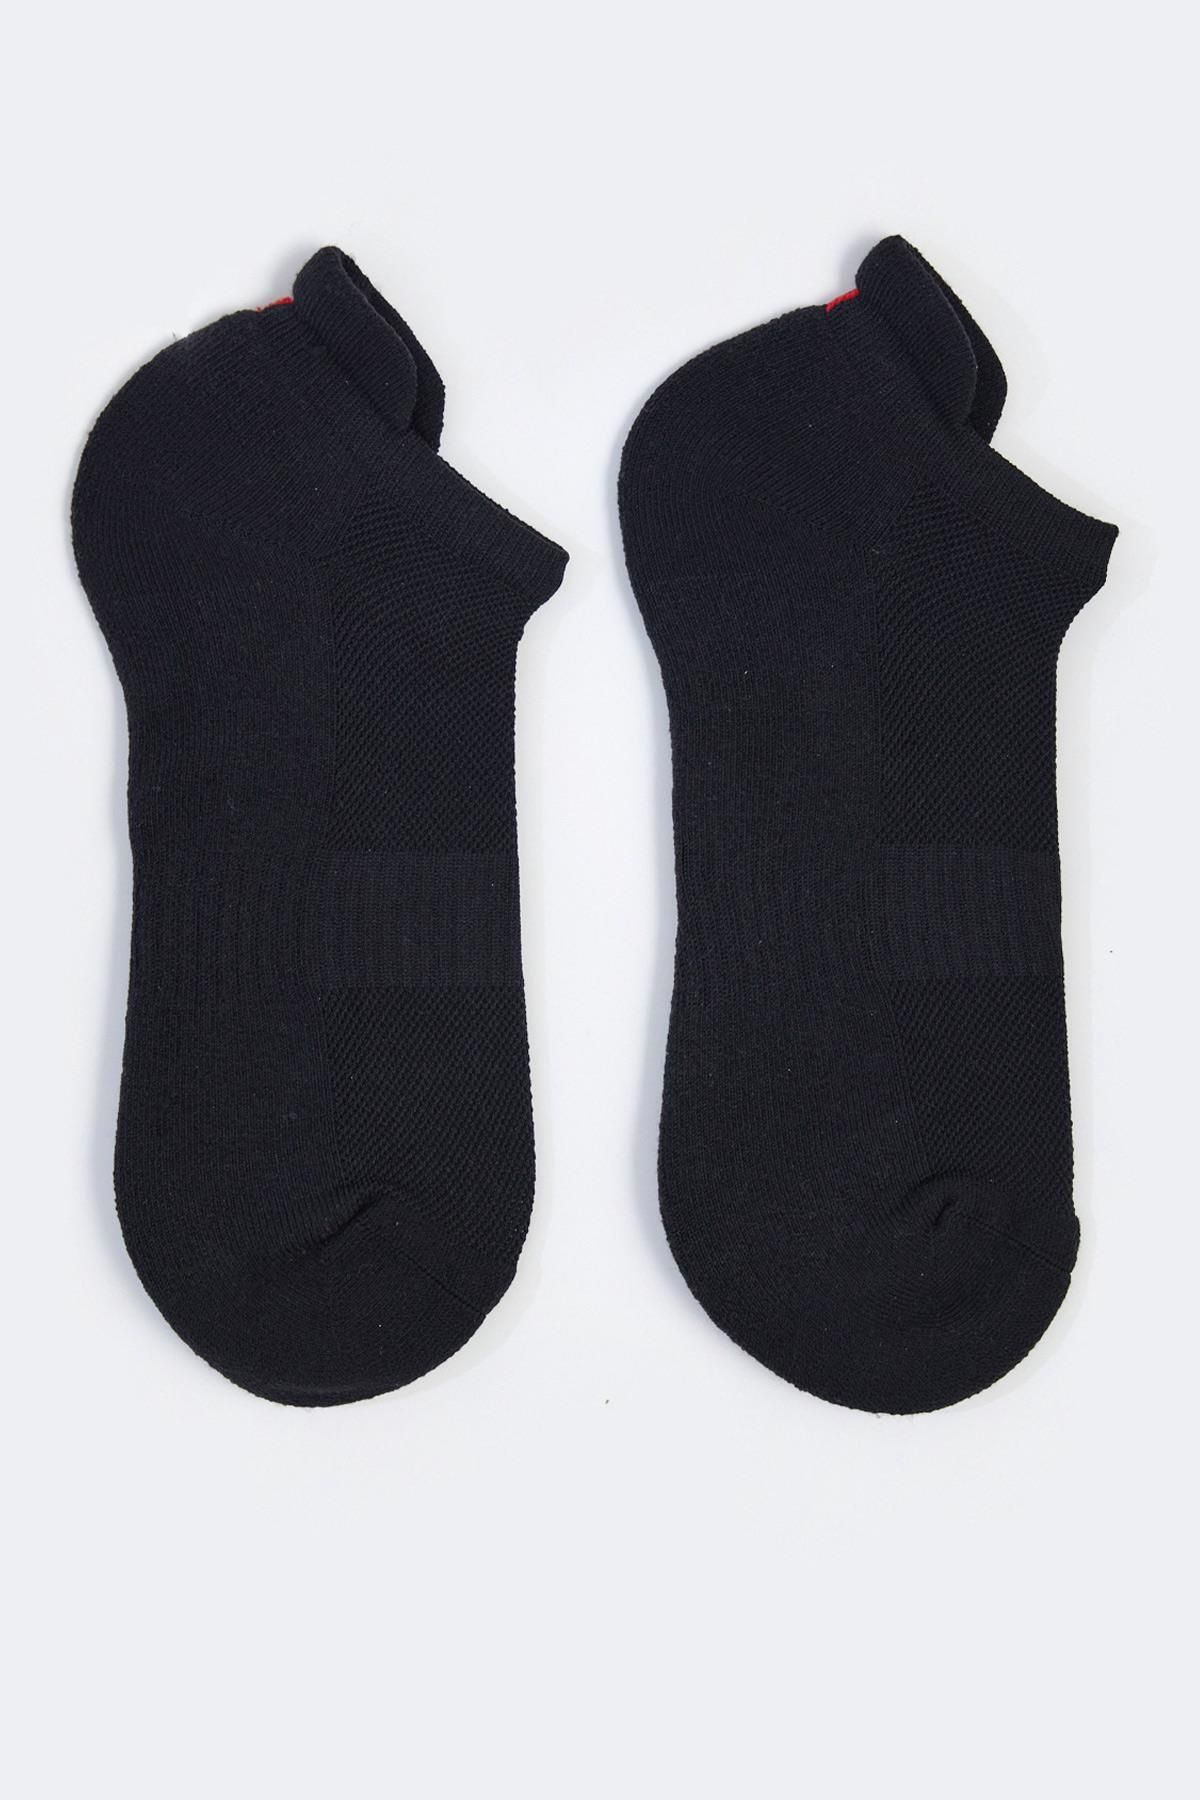 Katia & Bony 2'li Paket Erkek Golf Patik Çorap Siyah/siyah